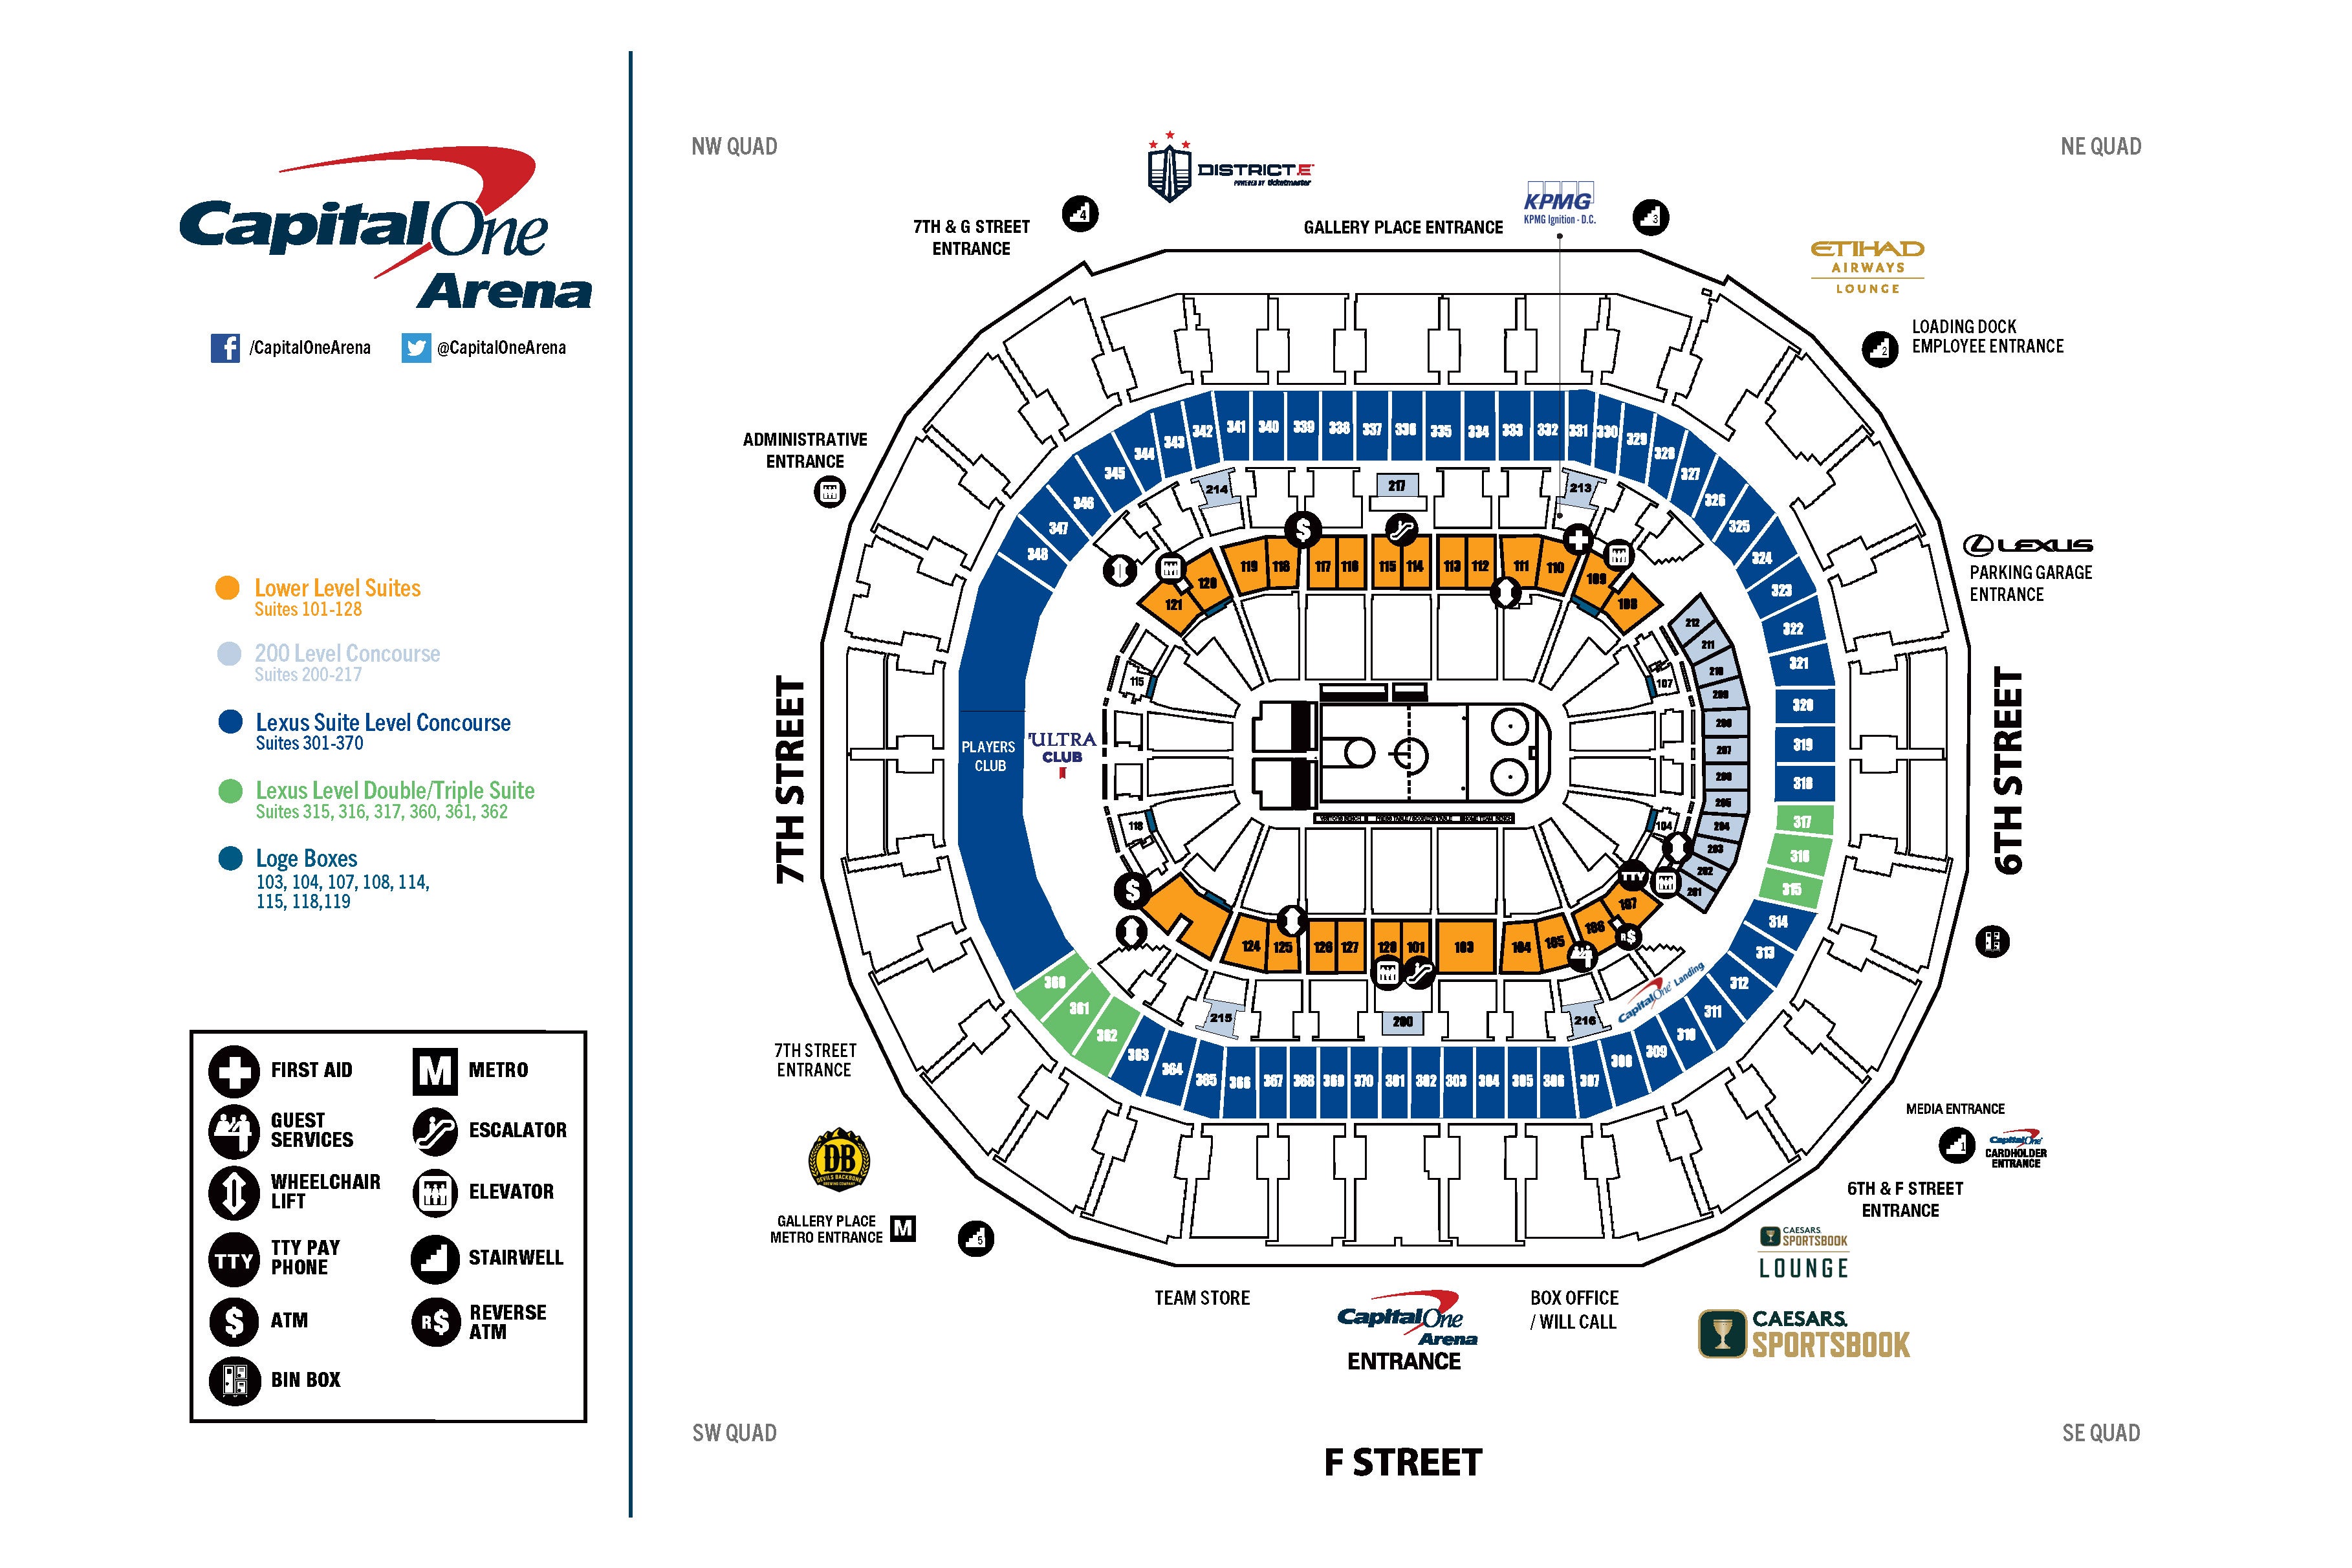 Washington DC Capital One Arena Center seat numbers detailed seating plan 